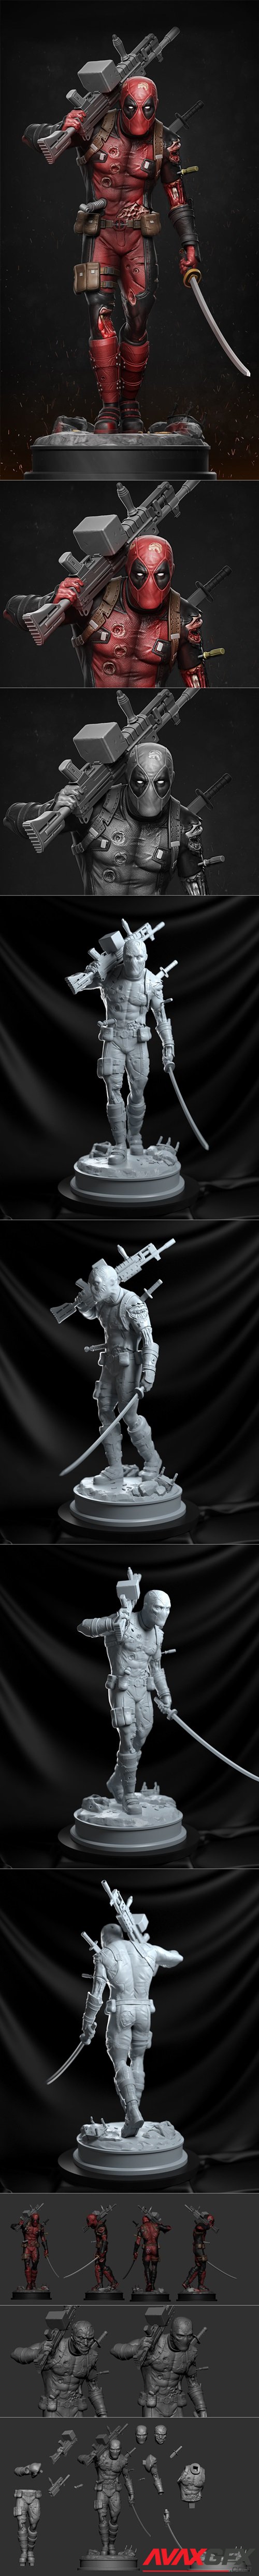 Deadpool statue – 3D Printable STL